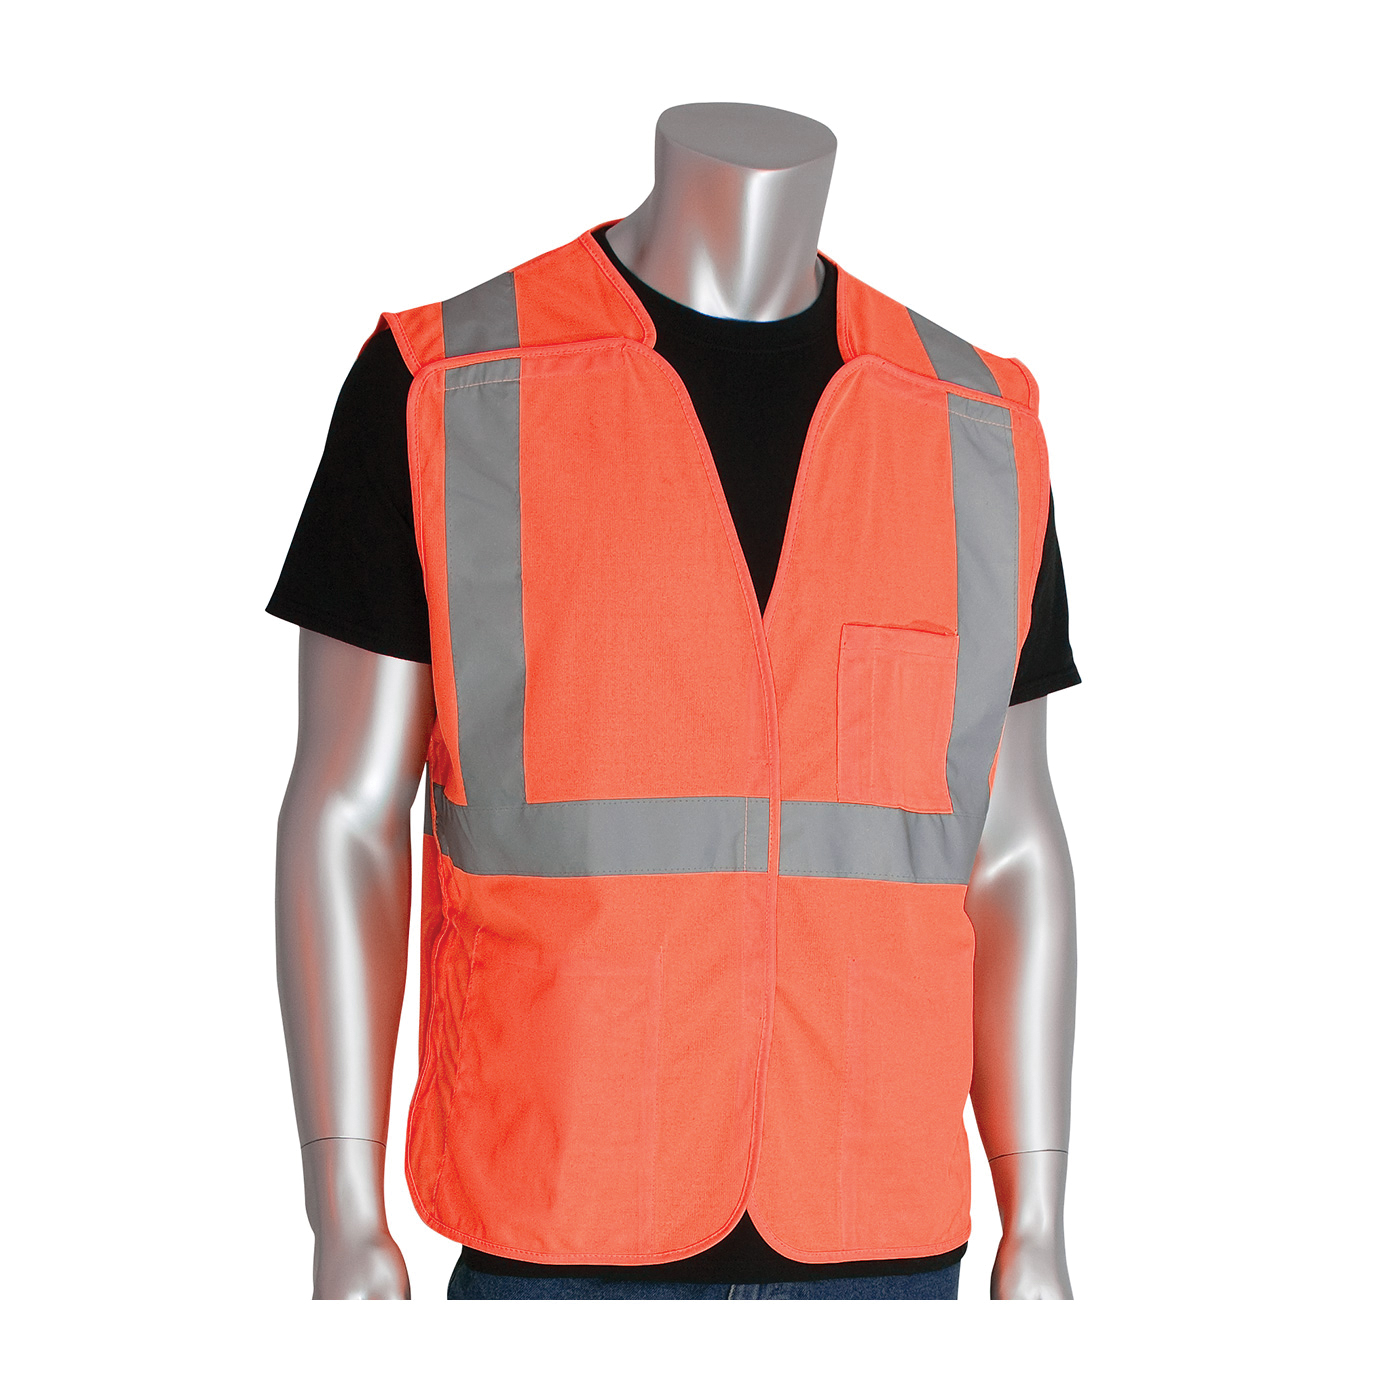 PIP® 302-5PVOR-L Safety Vest, L, Hi-Viz Orange, Polyester, Hook and Loop Closure, 3 Pockets, ANSI Class: Class 2, Specifications Met: ANSI 107 Type R